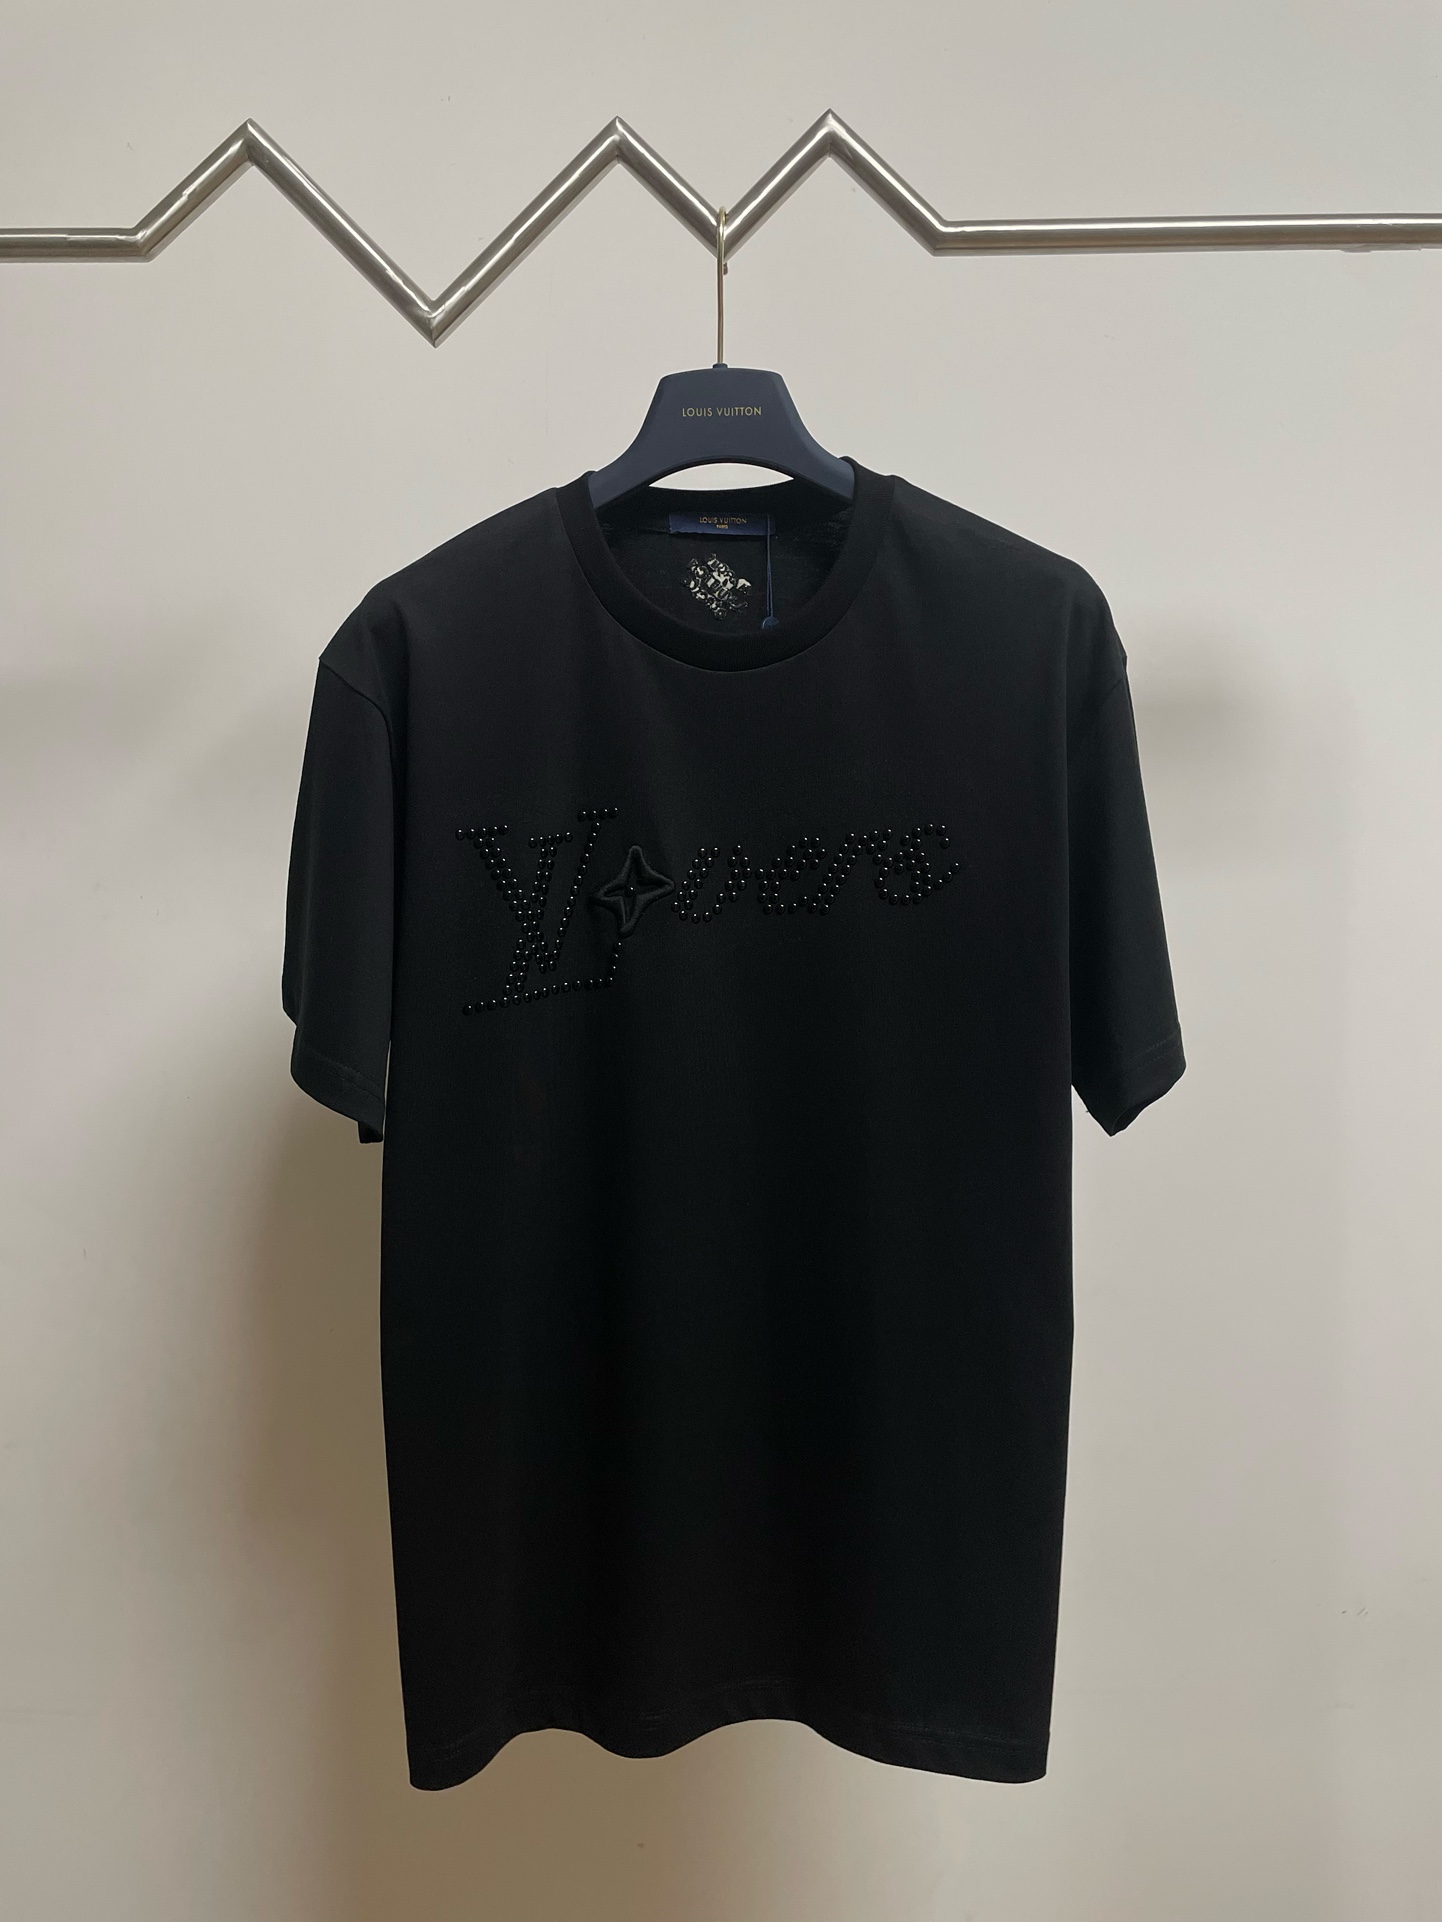 Louis Vuitton Clothing T-Shirt Black Rivets Unisex Cotton Spring/Summer Collection Short Sleeve